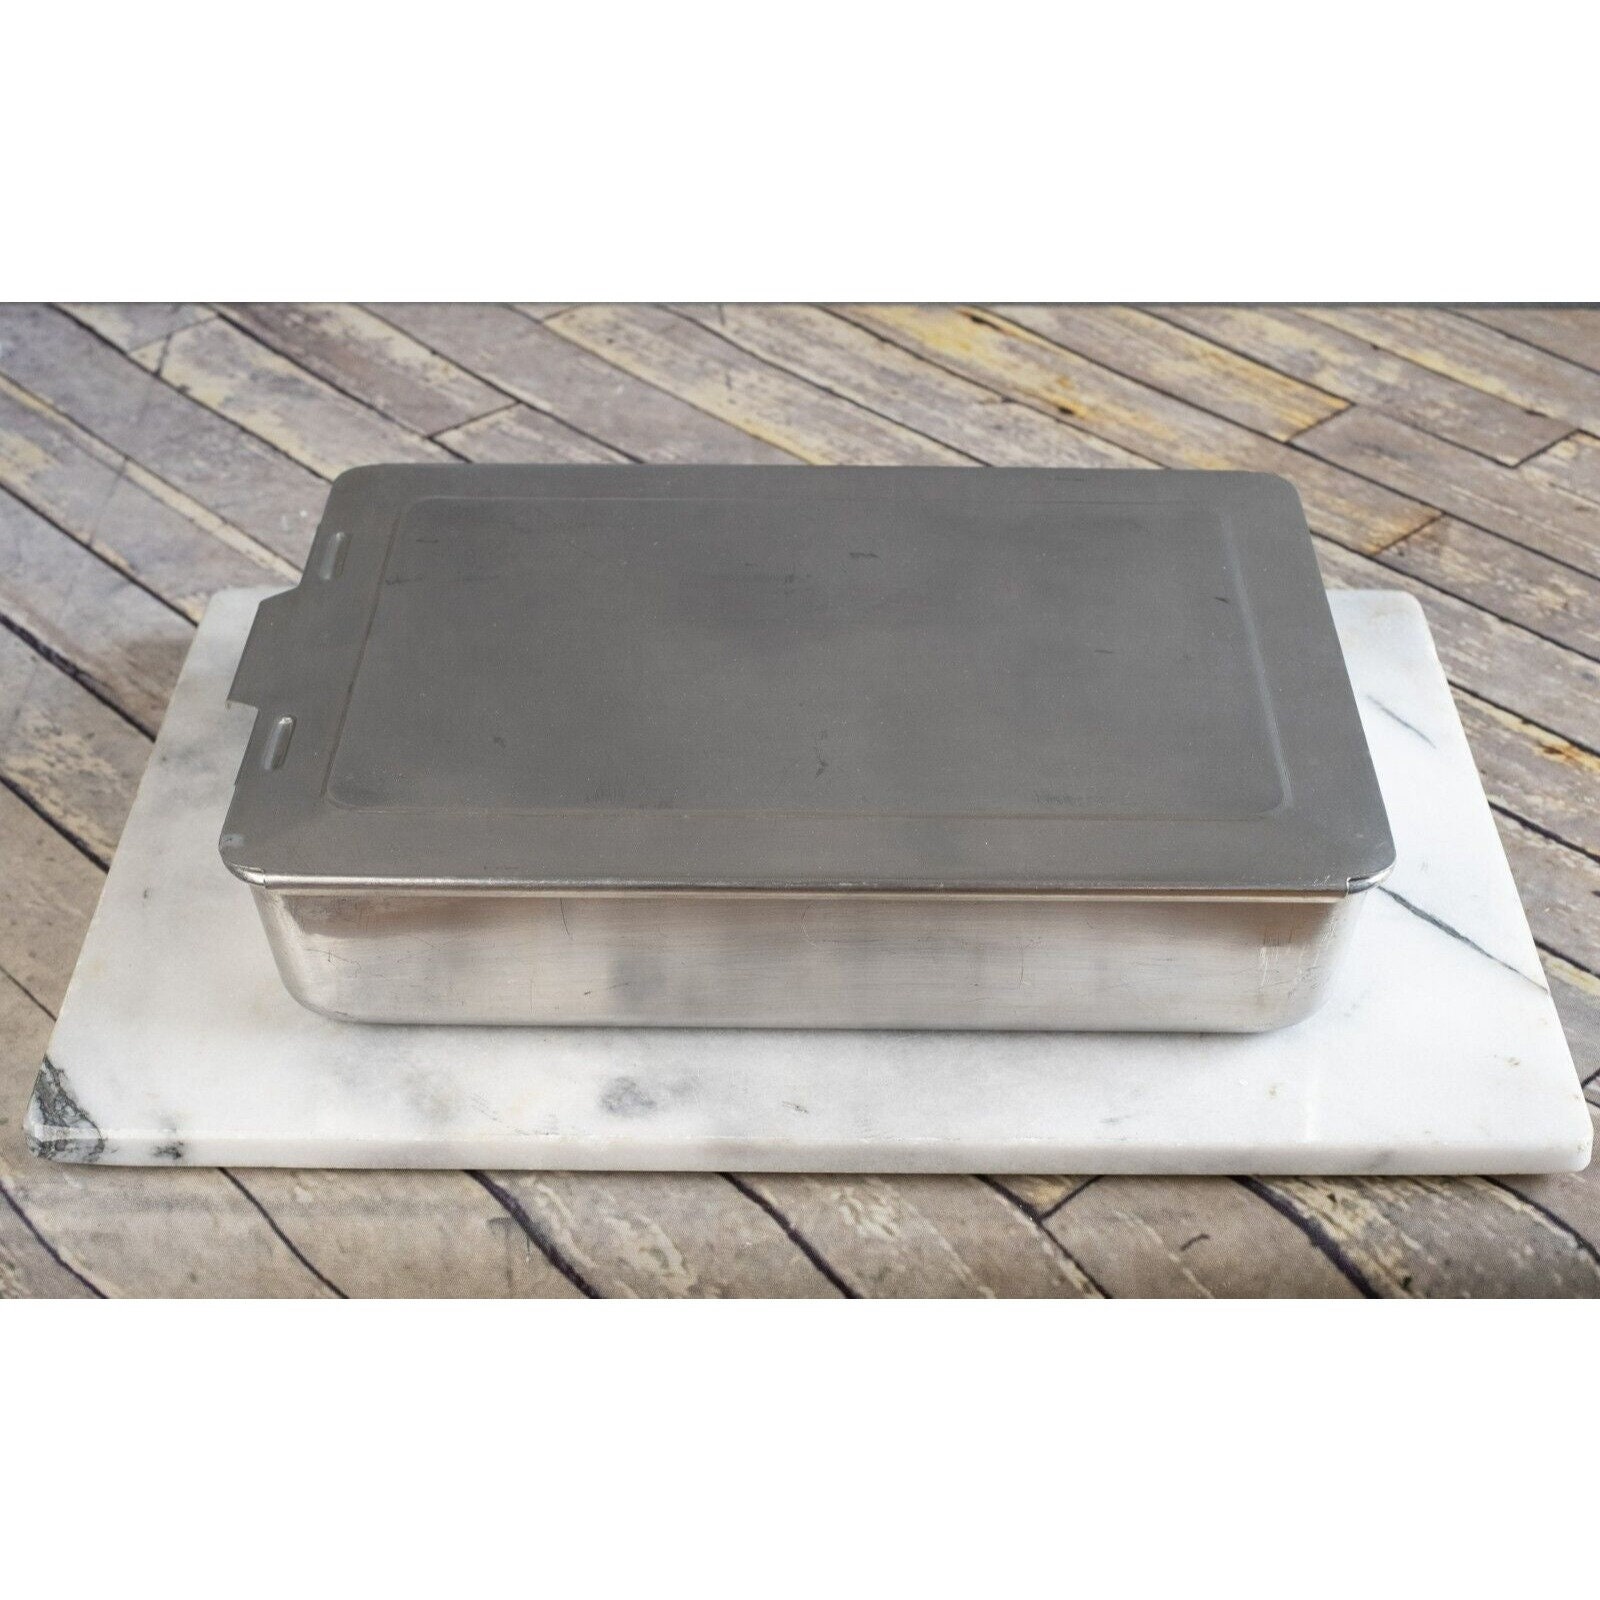 VTG 2 Foley Aluminum Cover Lid Replacement 9 x 13 Cake Pan / baking sheet  pan